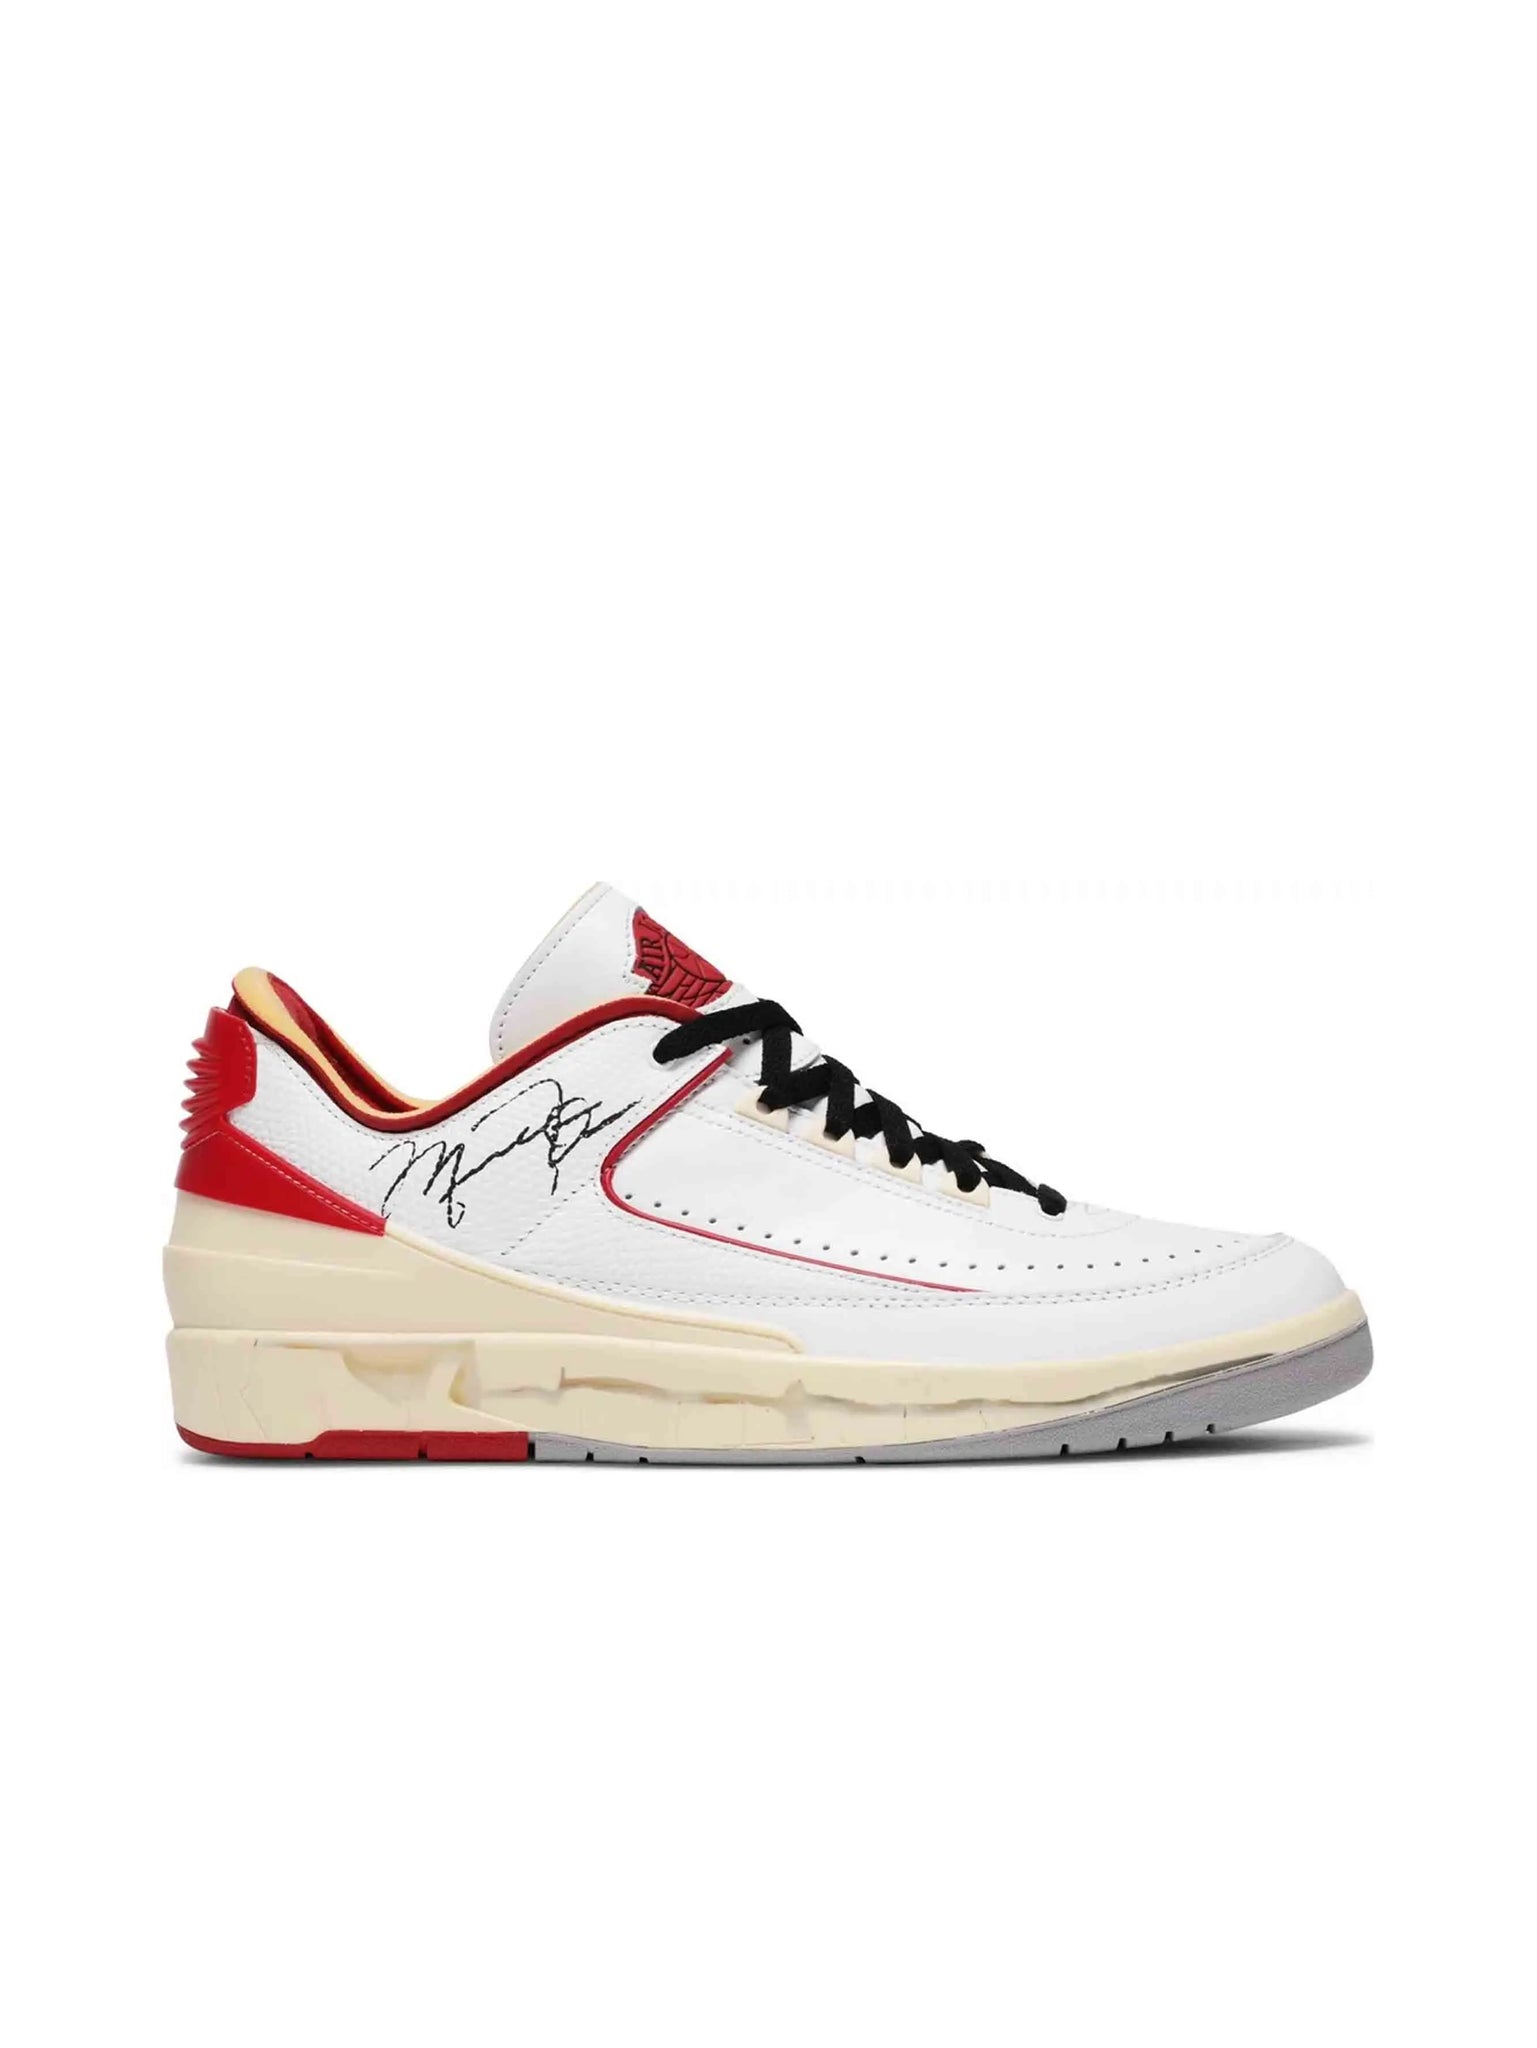 Nike Air Jordan 2 Retro Low SP Off-White White Red - Prior